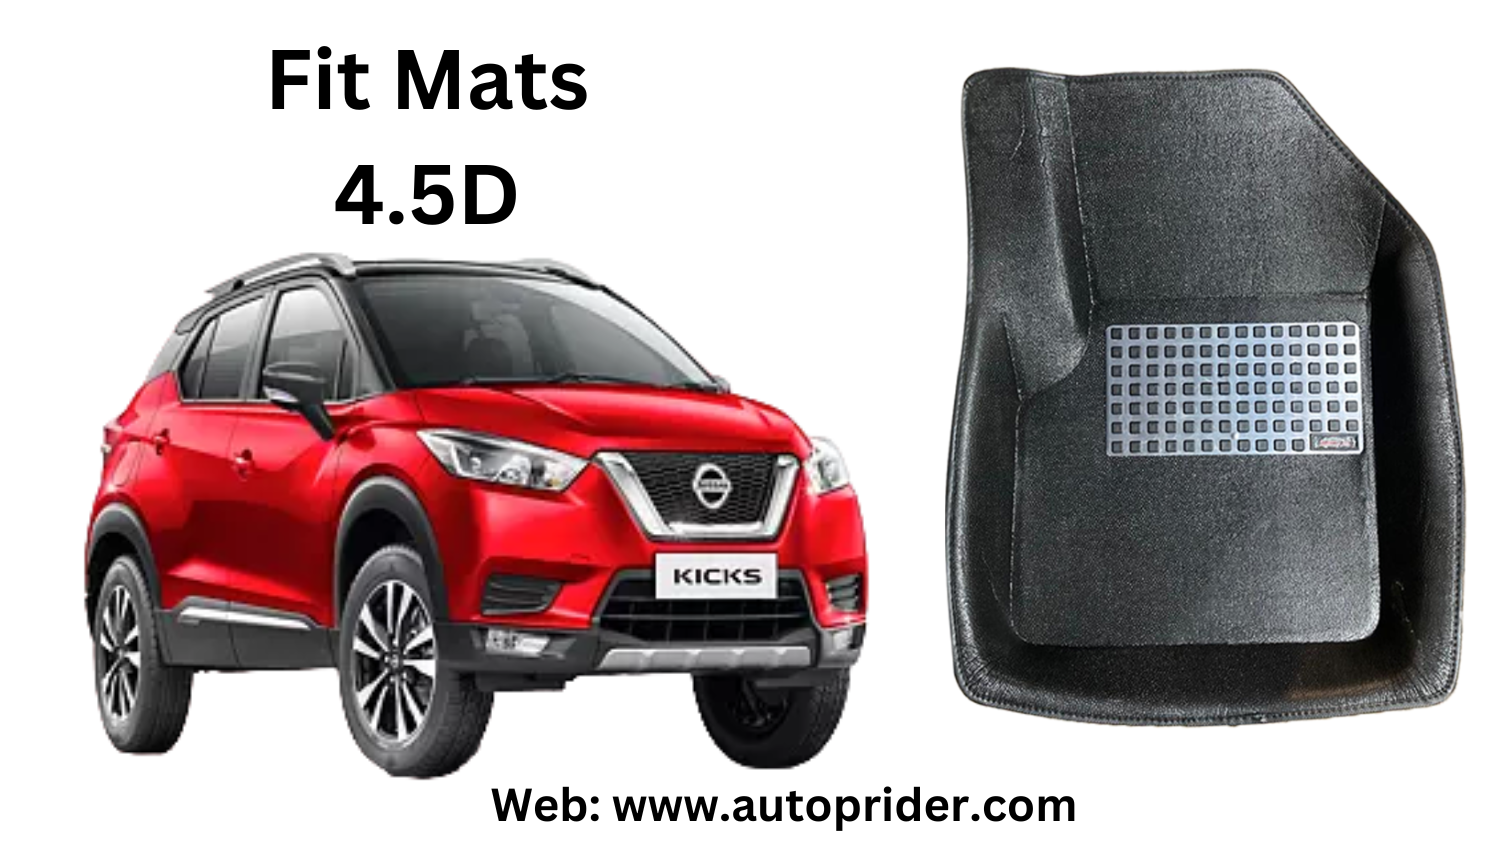 Autoprider | Fit Mats 4.5D Economy Car Mats for Nissan Kick